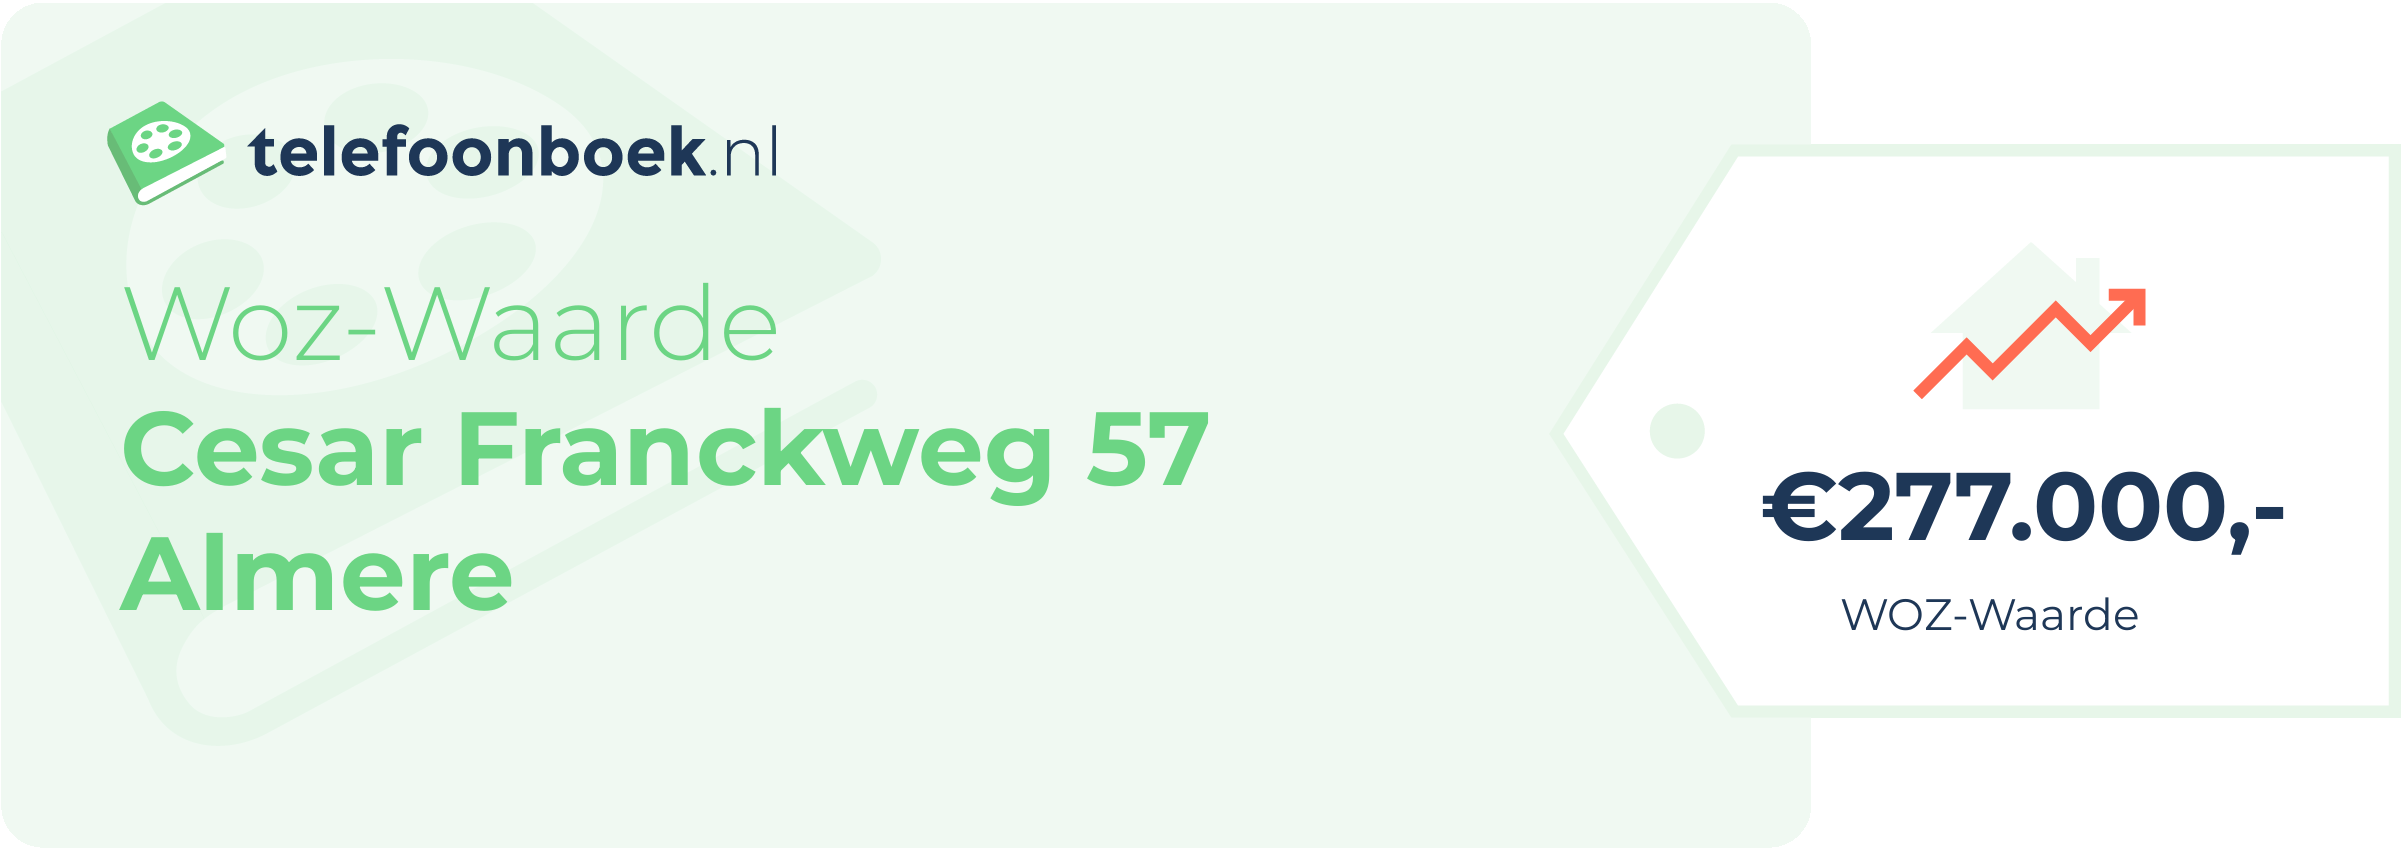 WOZ-waarde Cesar Franckweg 57 Almere